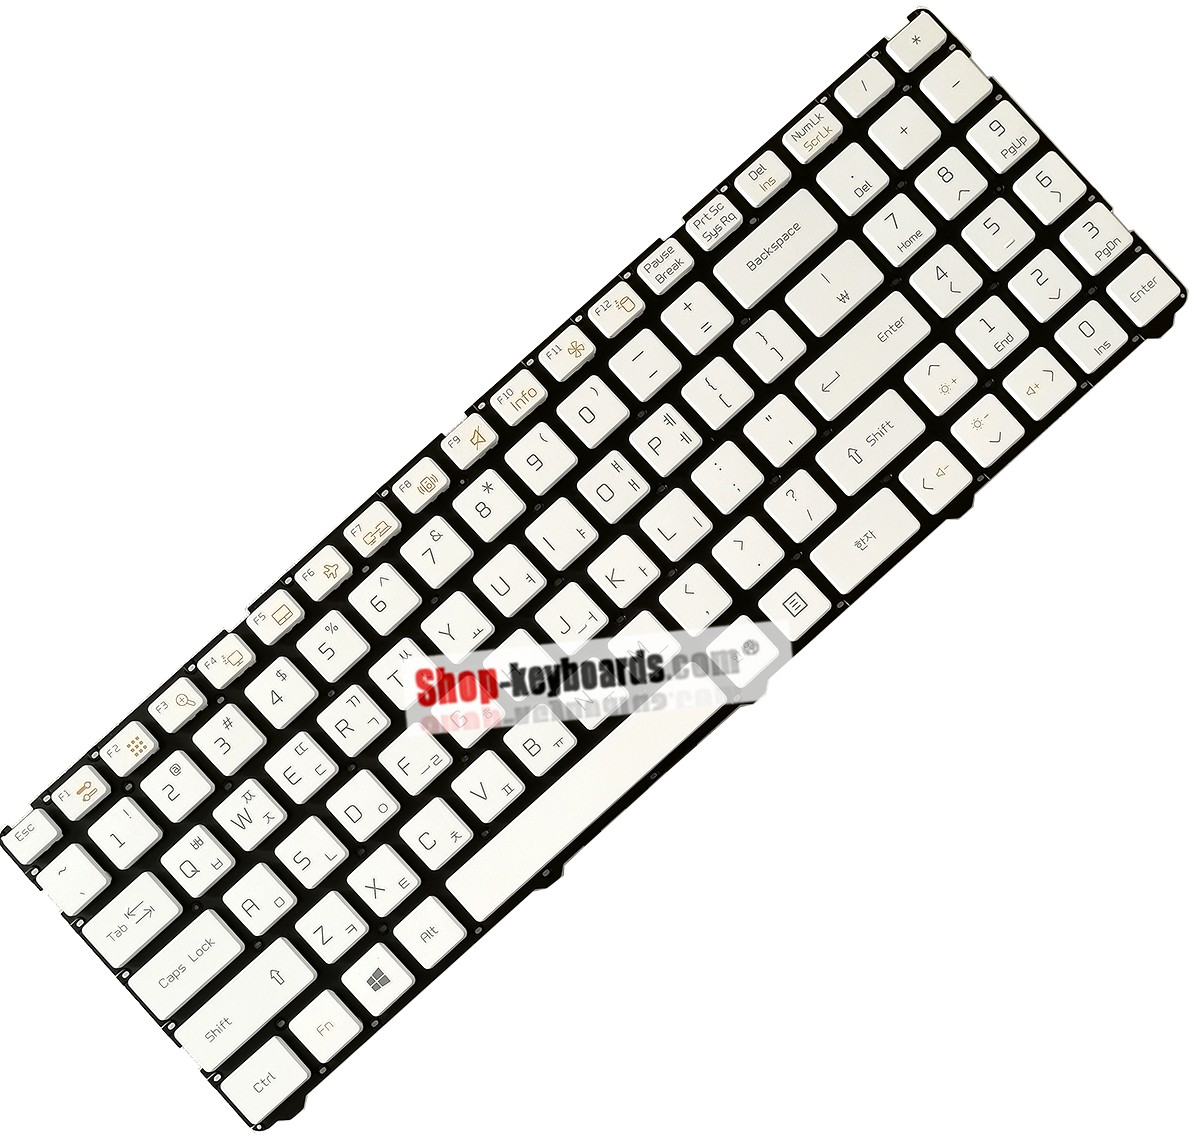 LG AELG9P00010 Keyboard replacement